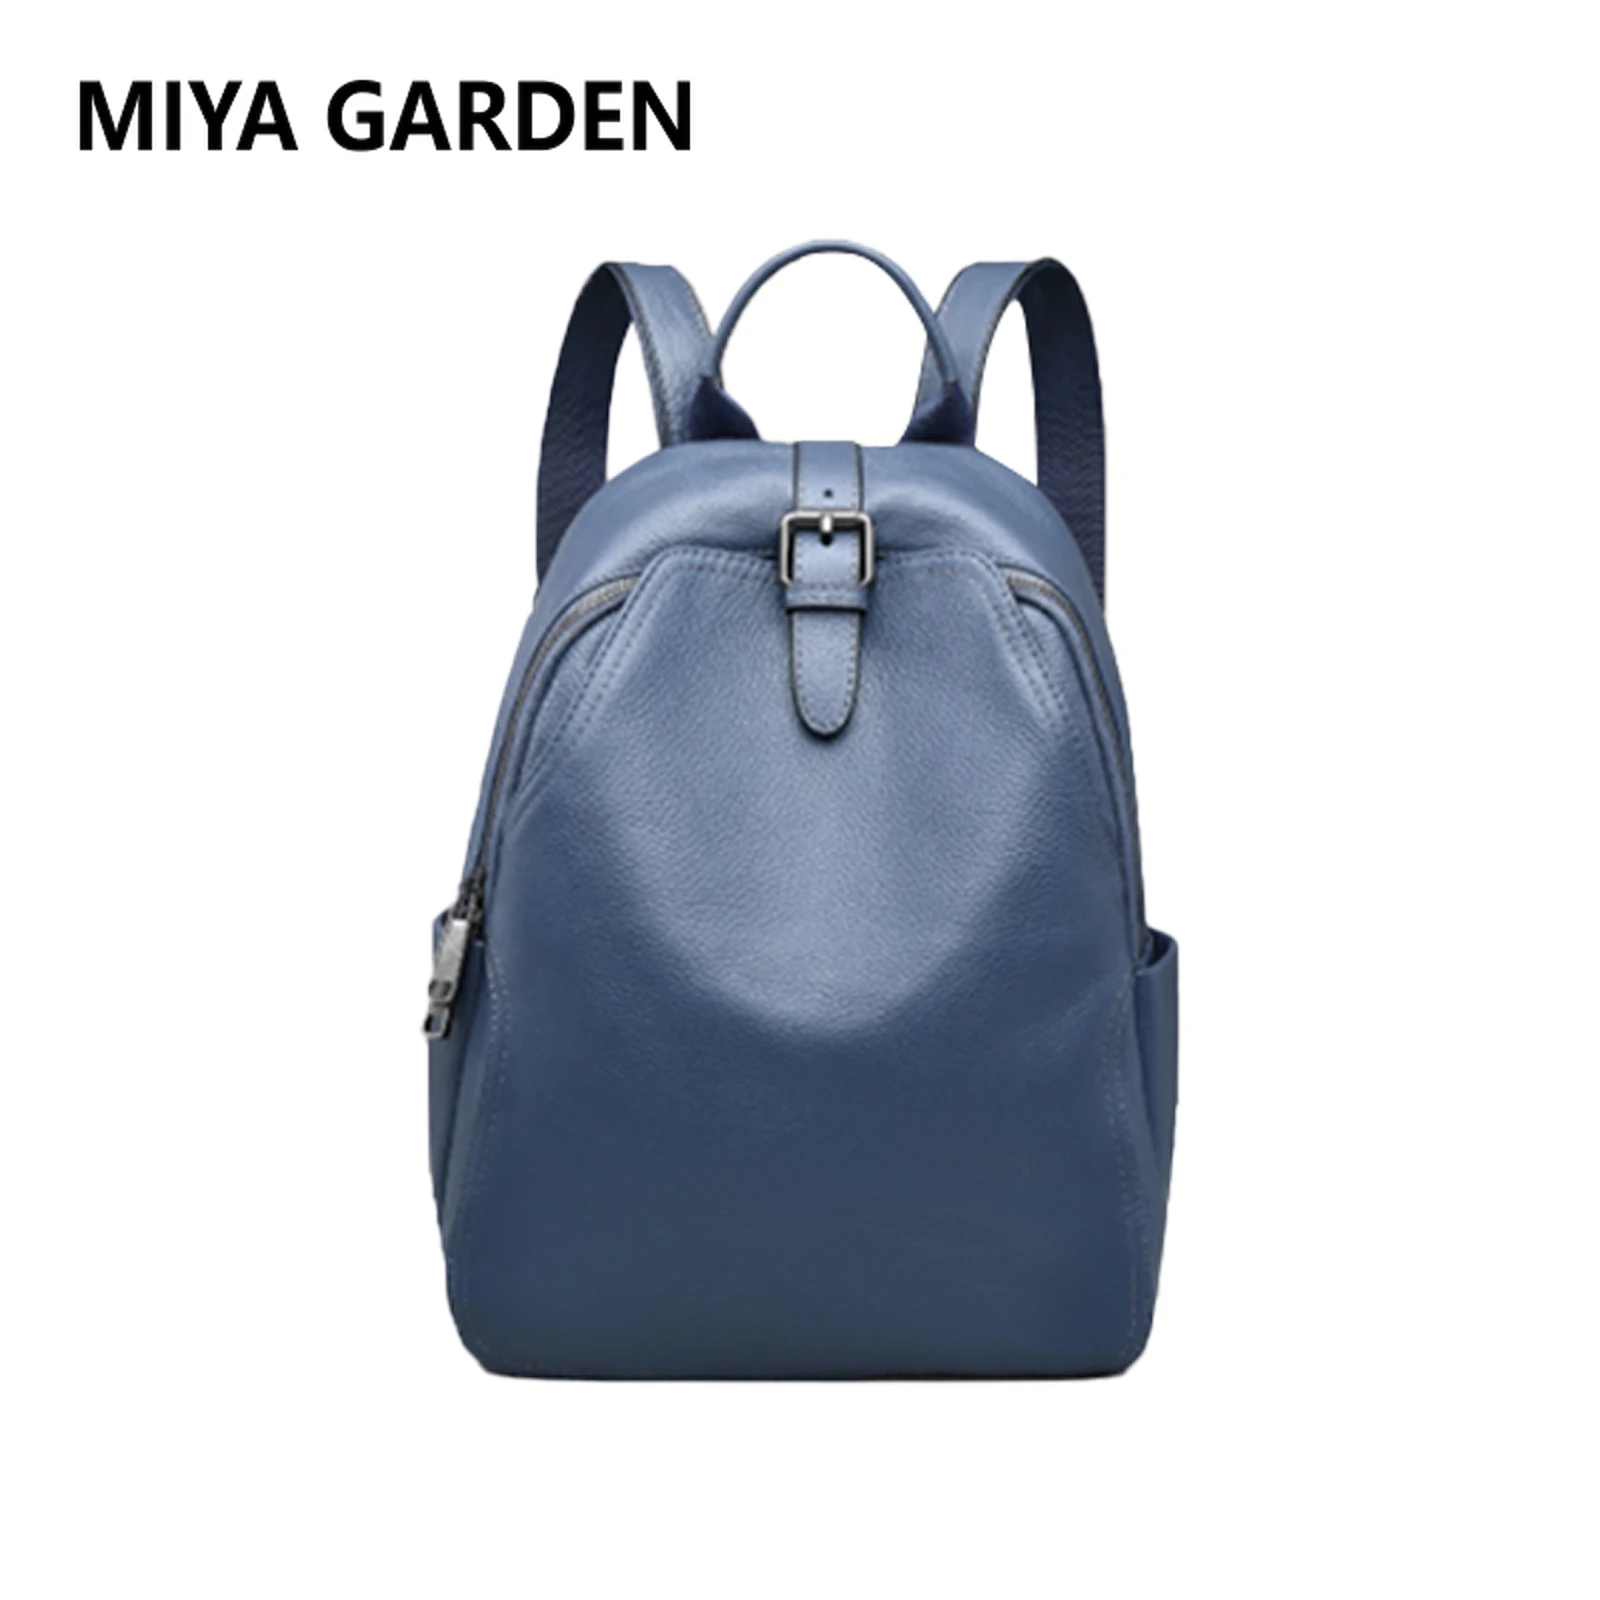 

MIYA GARDEN New Women's Backpacks High Quality Leather Women's Travel Bags Minimalist Style Bookbags Women's Shoulder Bags